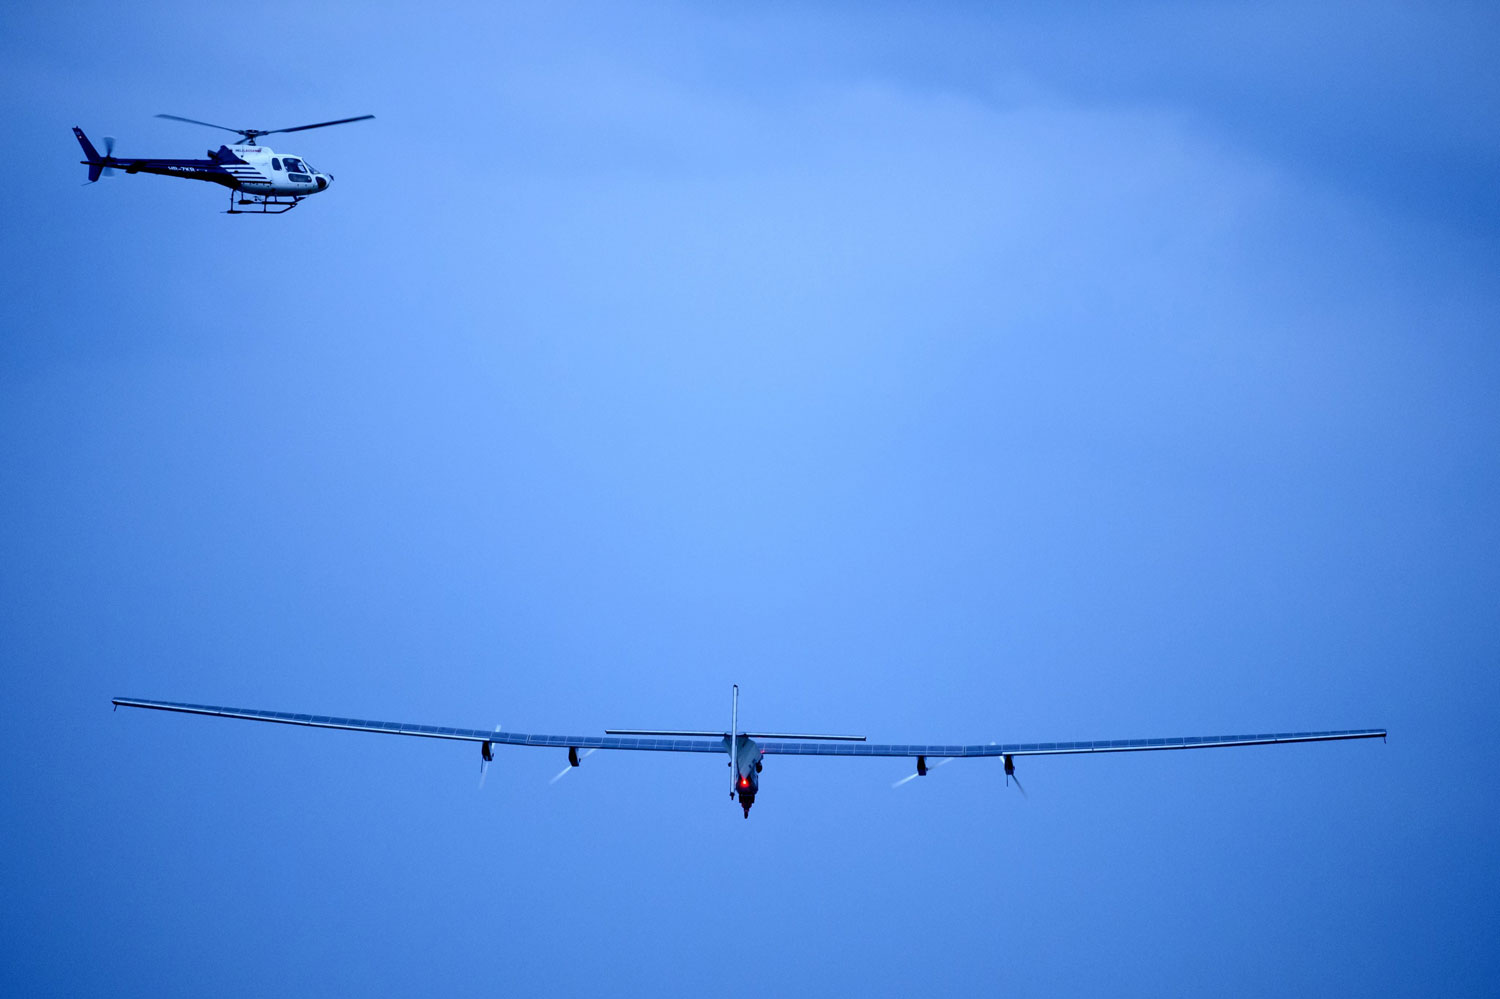 German test pilot Markus Scherdel steers Solar Impulse 2 on its maiden flight from its base in Payerne on June 2, 2014.